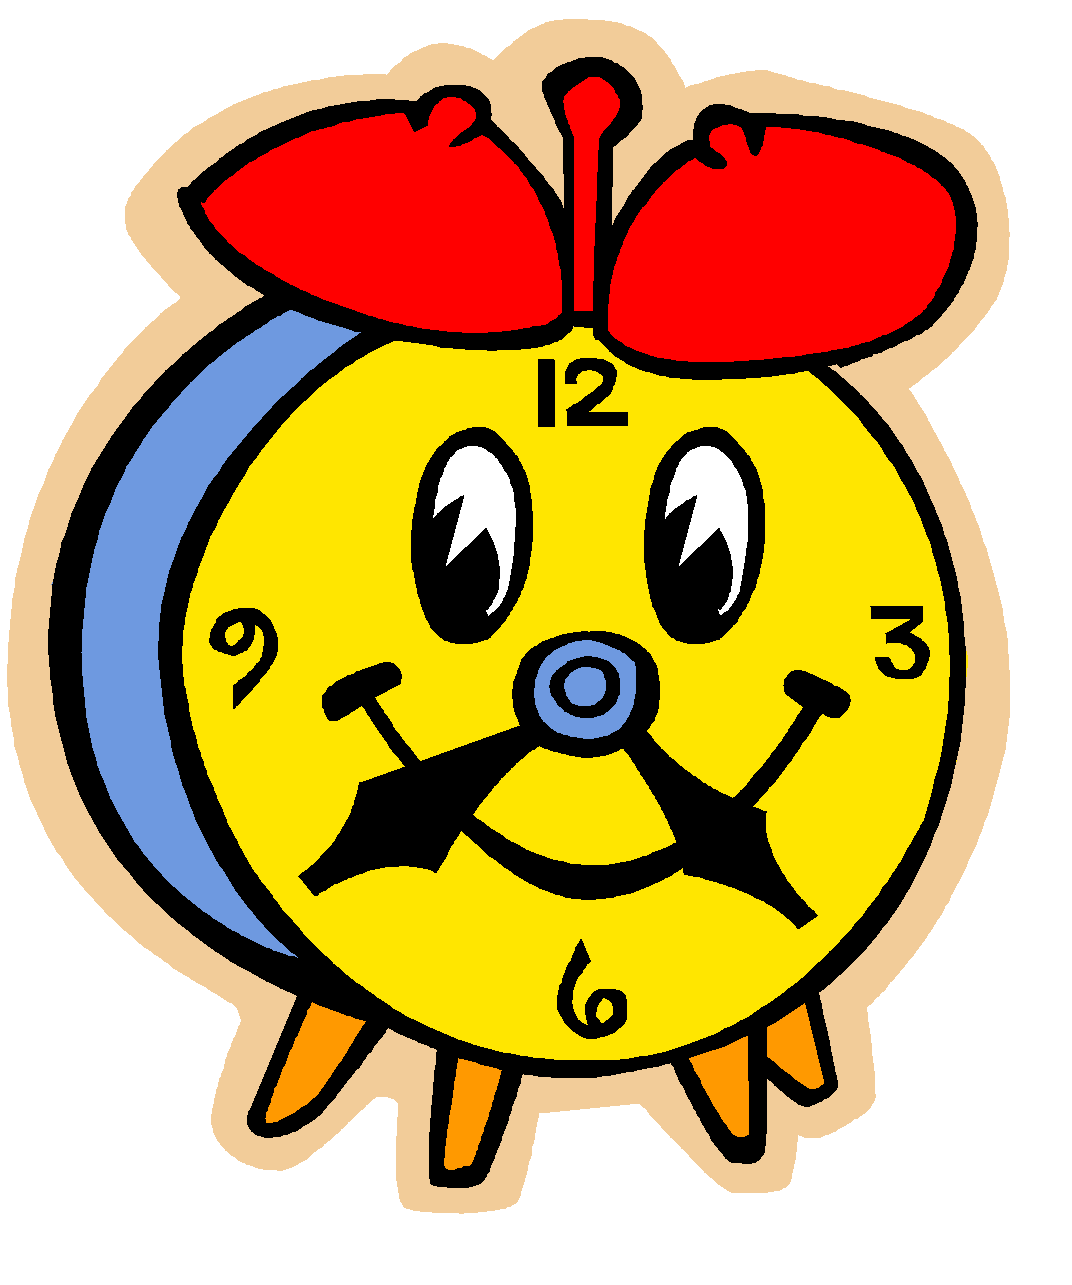 Alarm Clock Cartoon Image / Cartoon Alarm Clock Royalty Free Stock ...